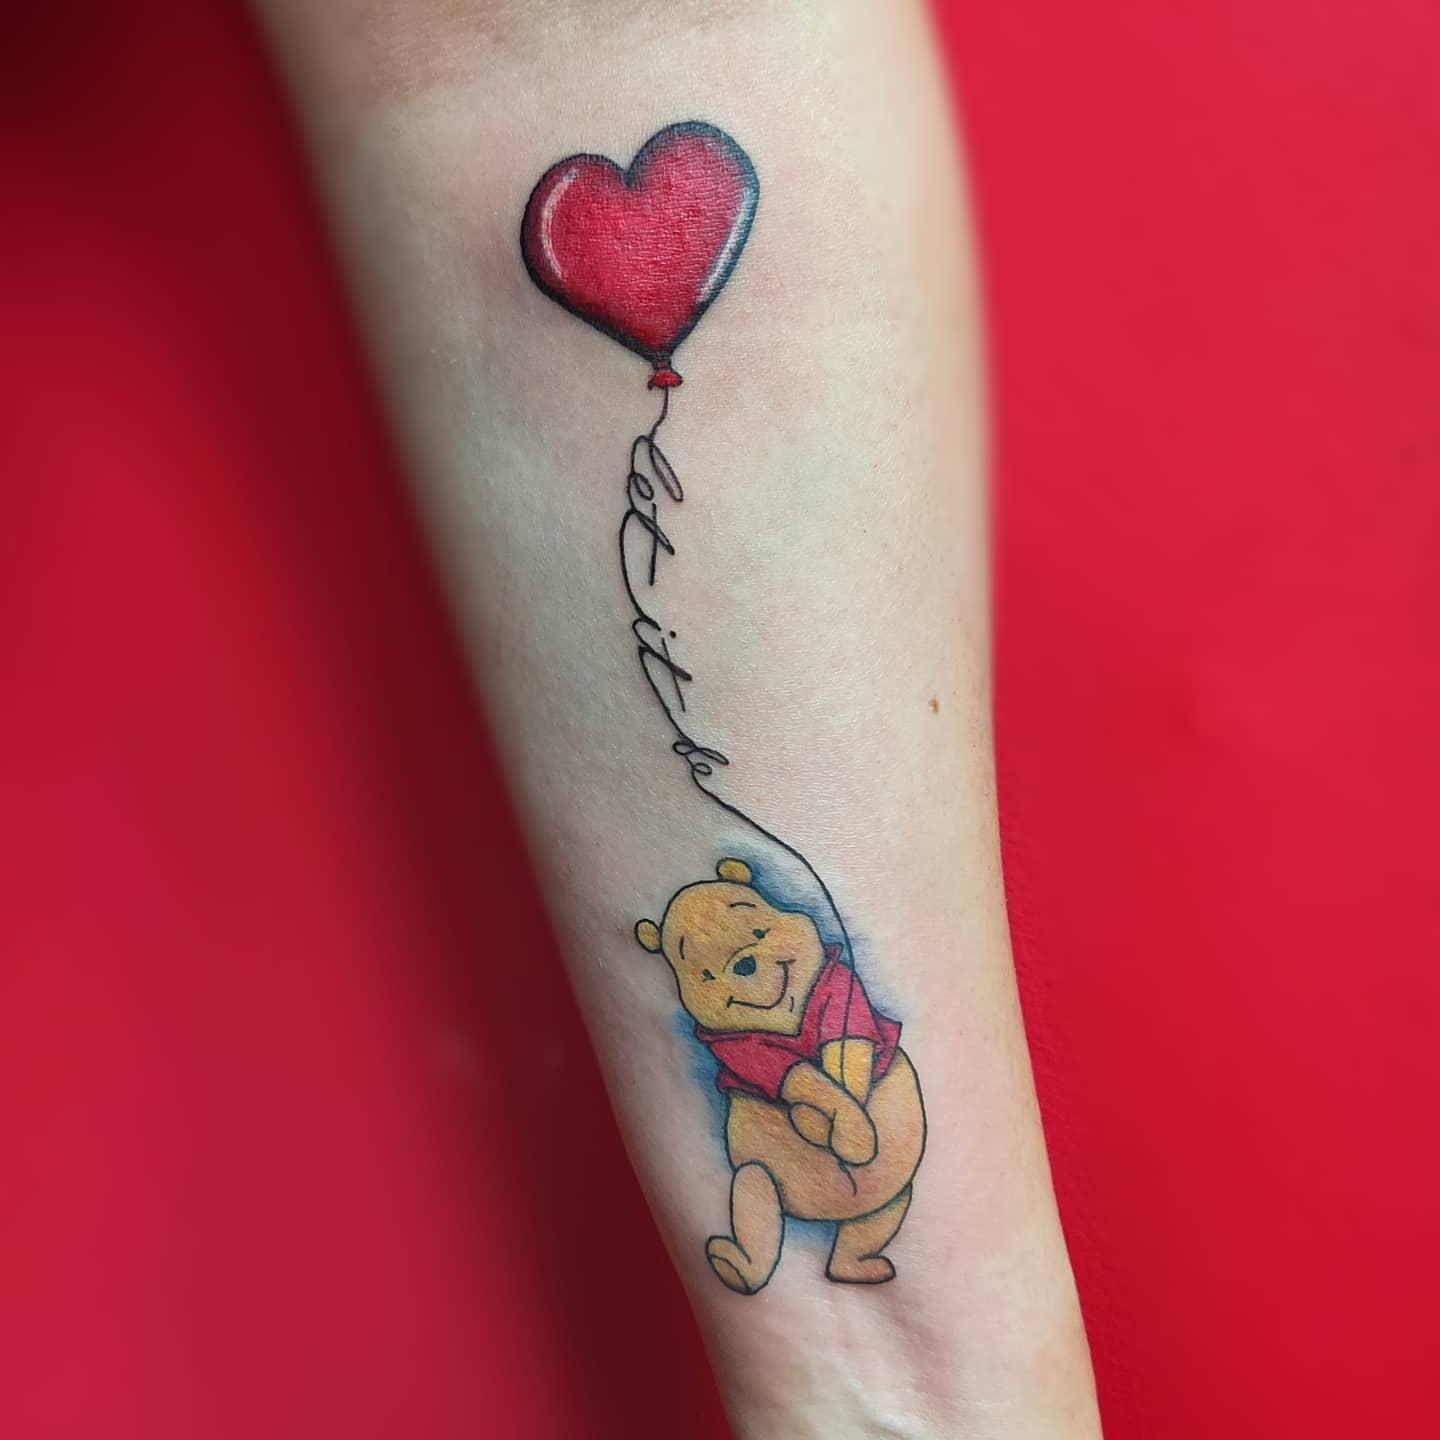 Painted People Tattoo Company on Instagram Cute little balloon heart with  anchor by Casey agentartist hearttattoo apprenticetattoo balloontattoo  burlingtontattoo